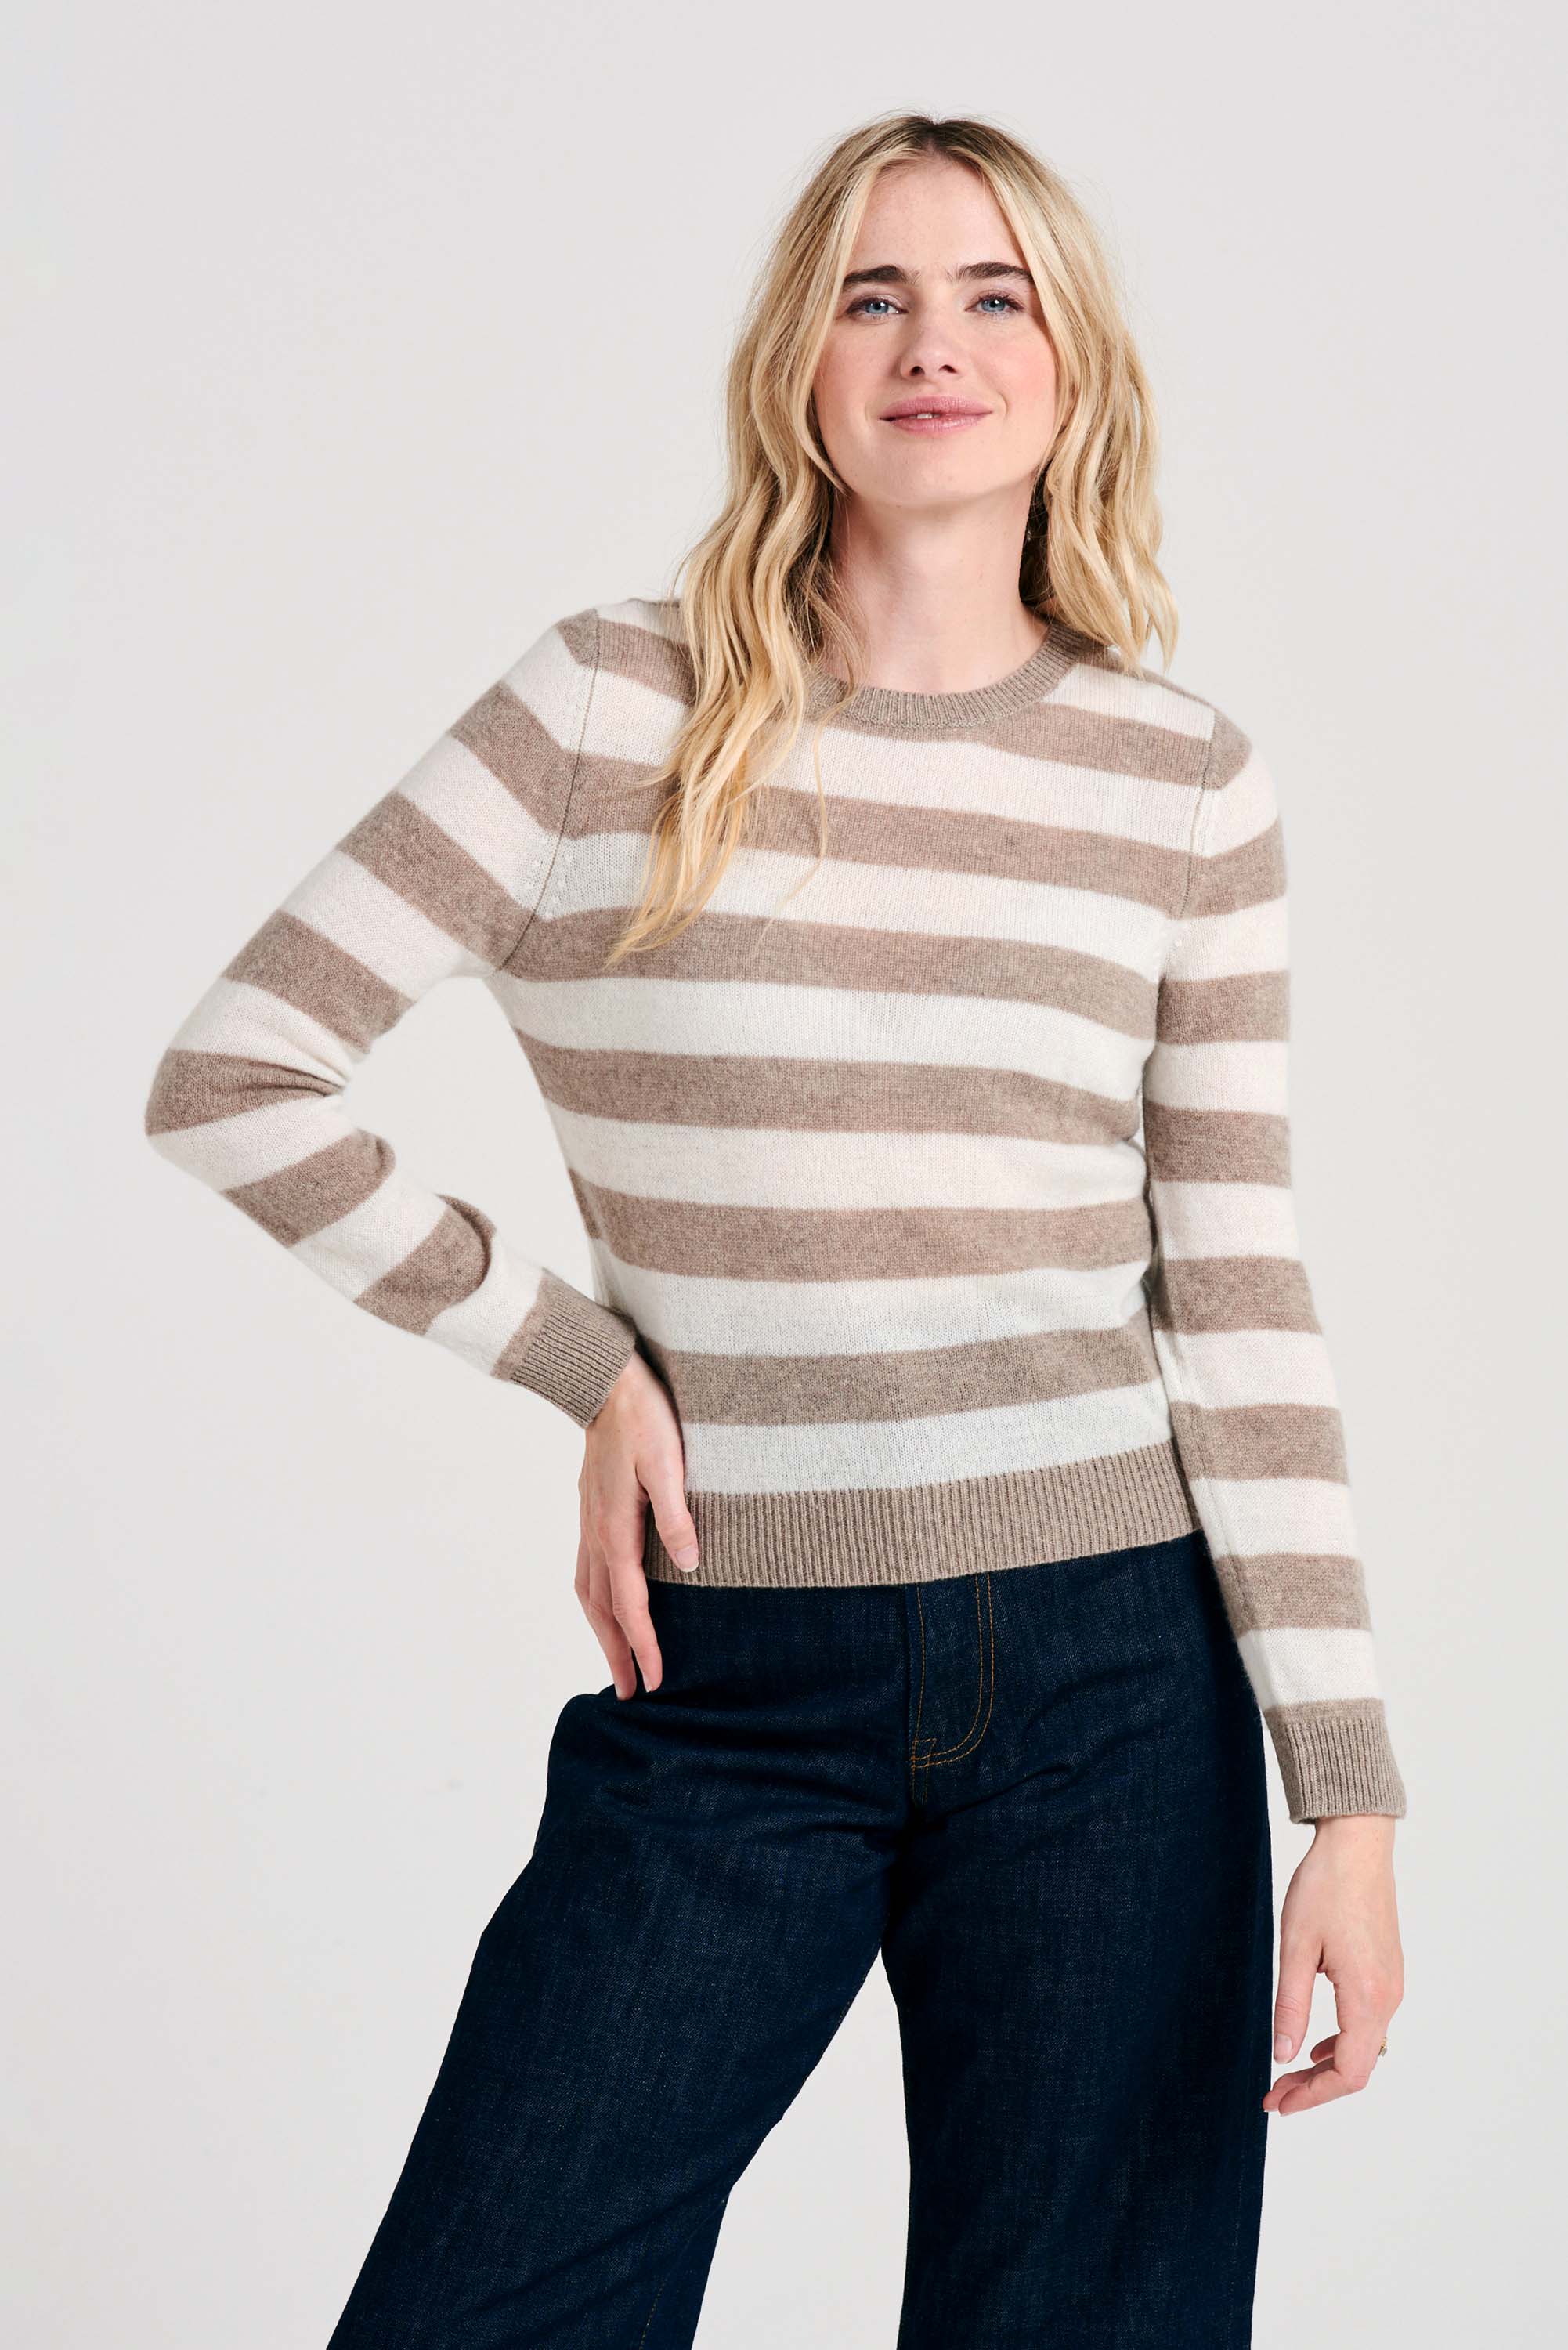 Blonde female model wearing Jumper1234 Stripe cashmere crew neck jumper in organic light brown and cream